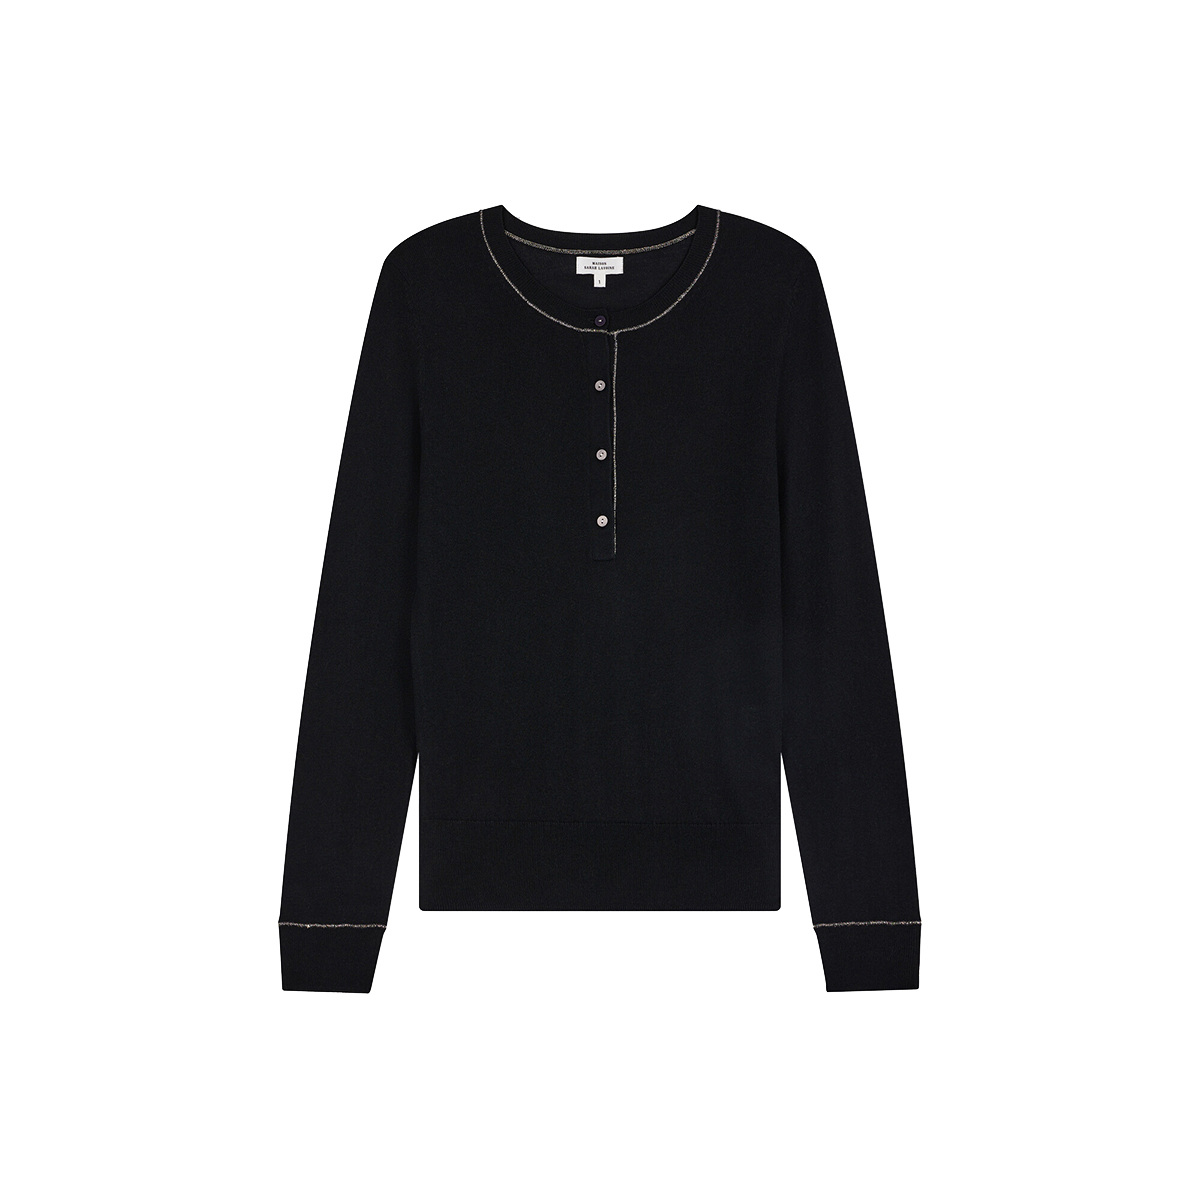 Covent Garden jumper, Black - Round neck - Silk and cashmere - image 1